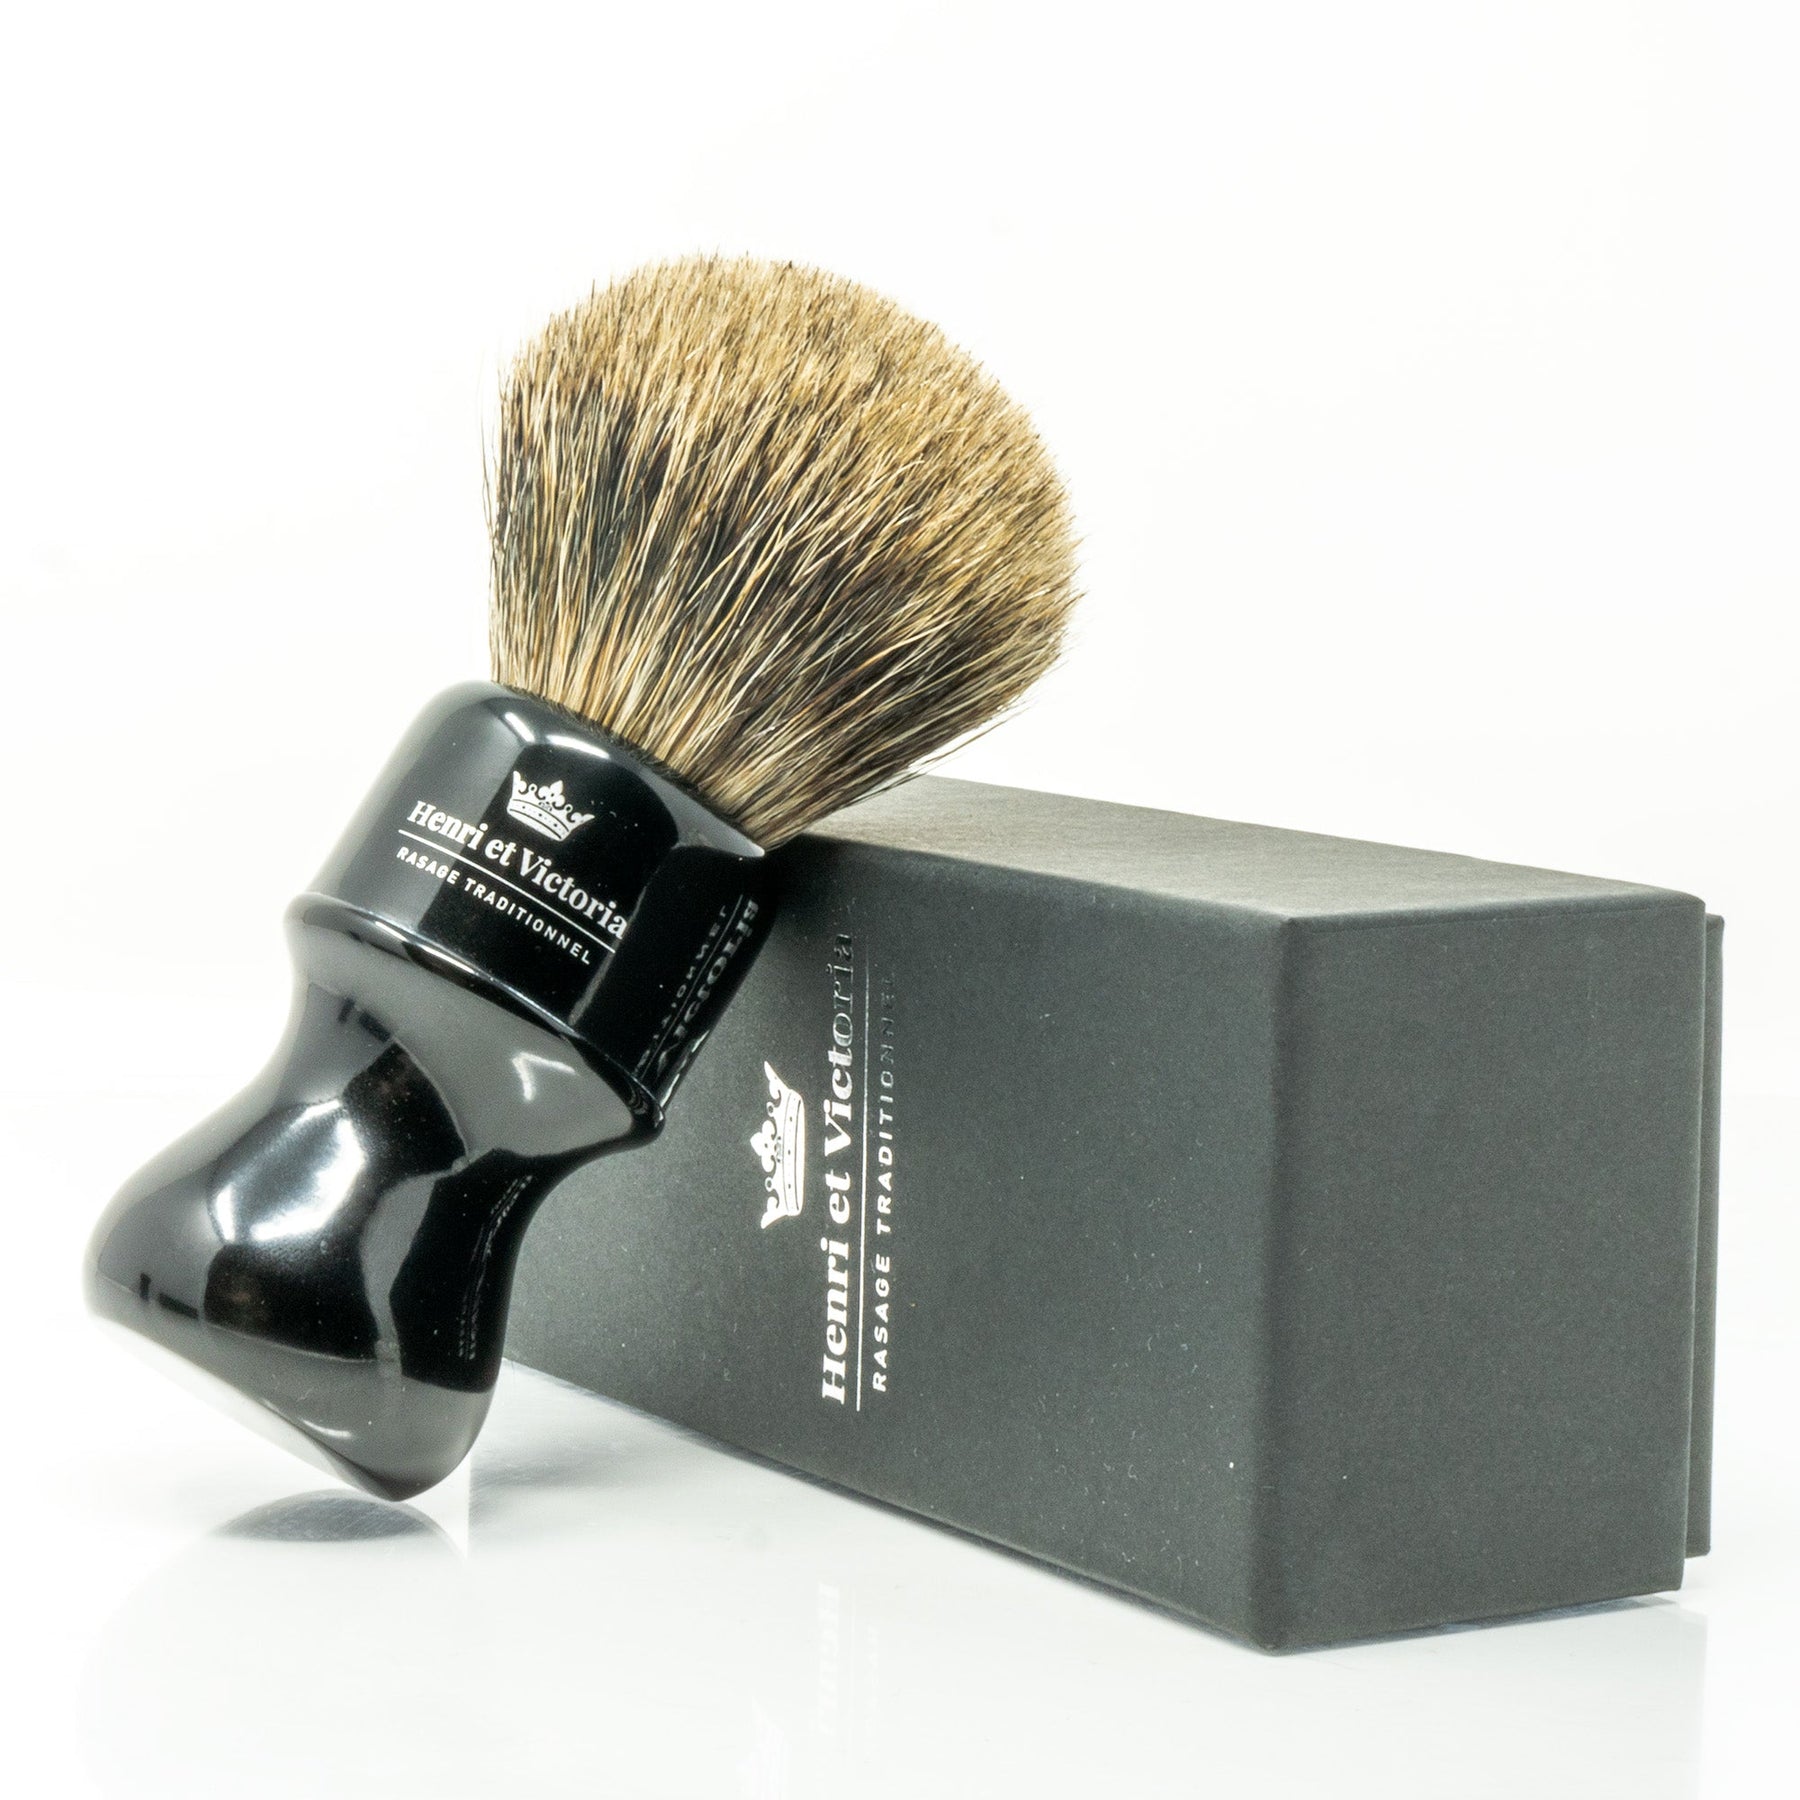 The Crown Pure Badger Shaving Brush